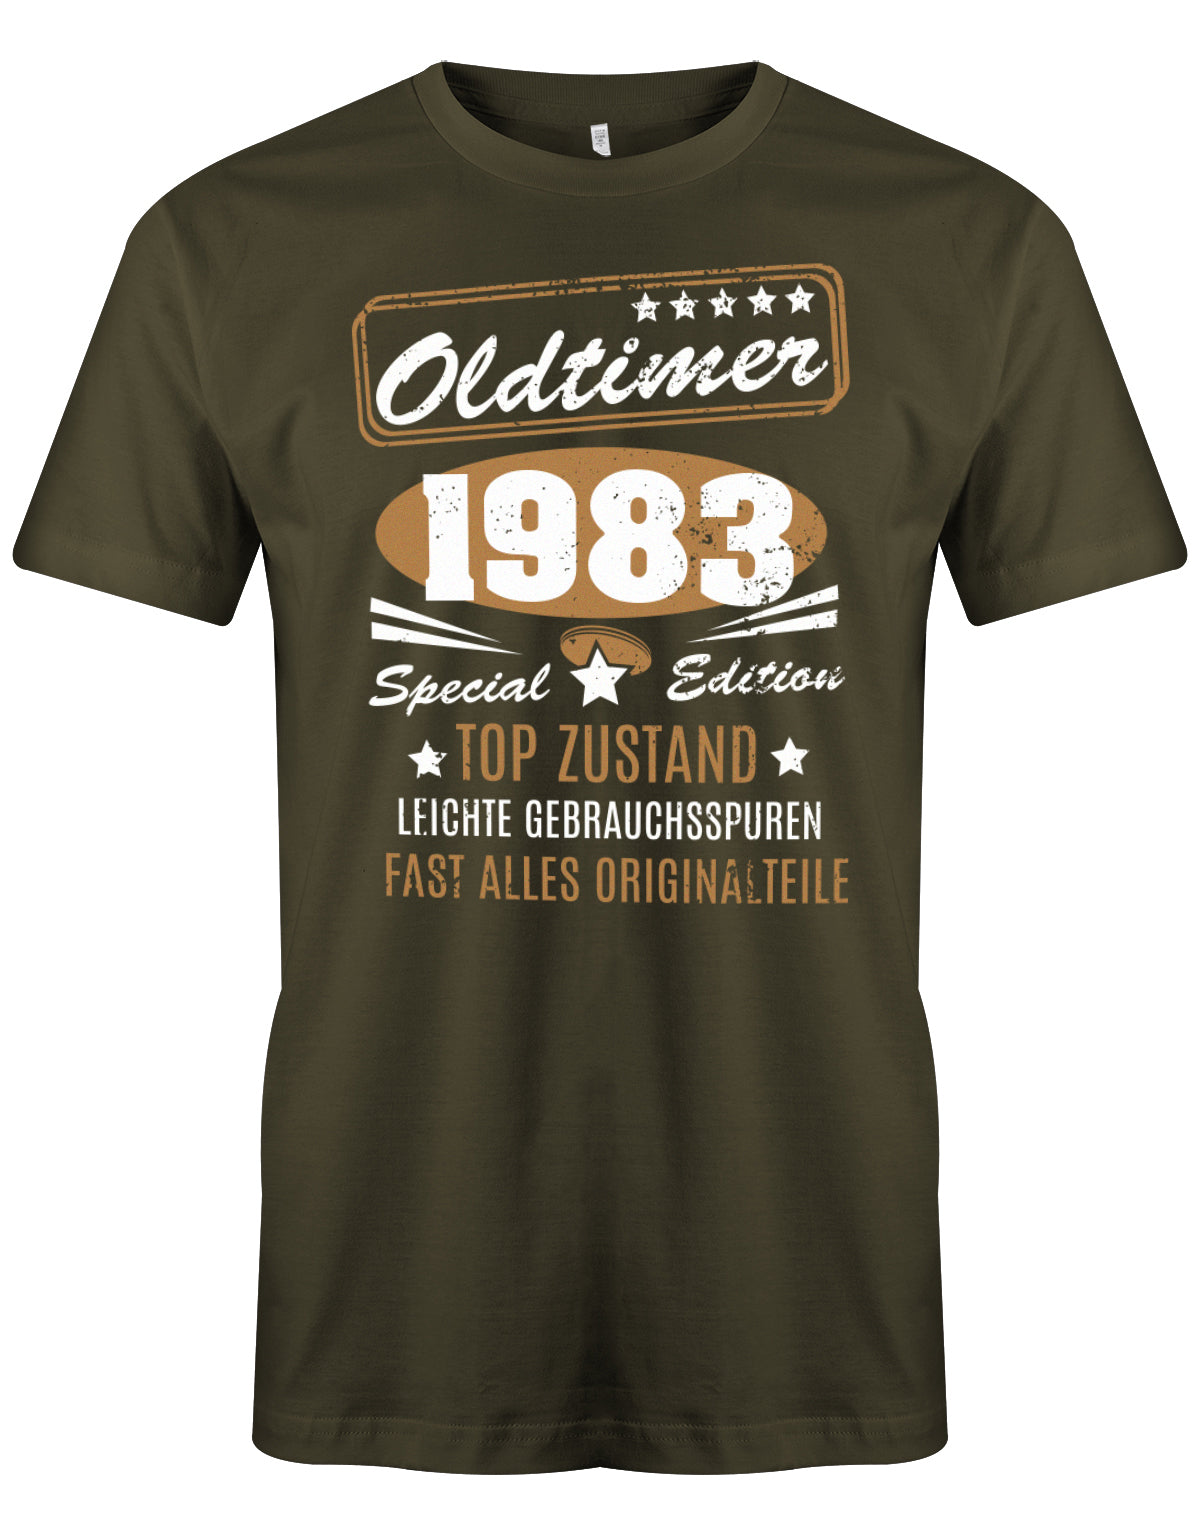 Oldtimer 1983 Special Edition Top Zustand - T-Shirt 40 Geburtstag Männer myShirtStore Army